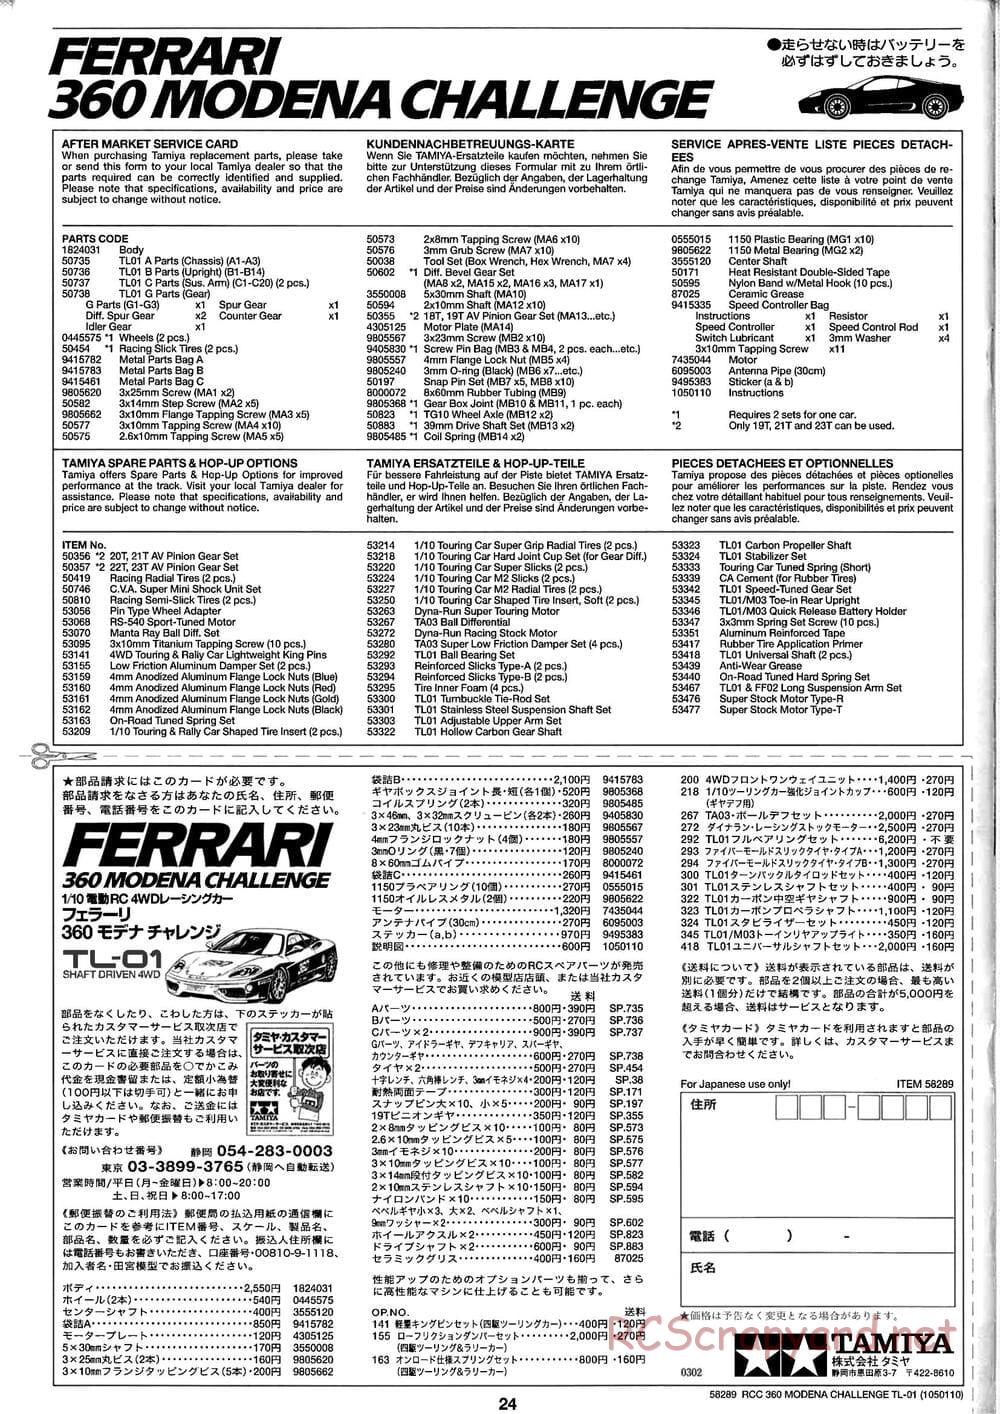 Tamiya - Ferrari 360 Modena Challenge - TL-01 Chassis - Manual - Page 24